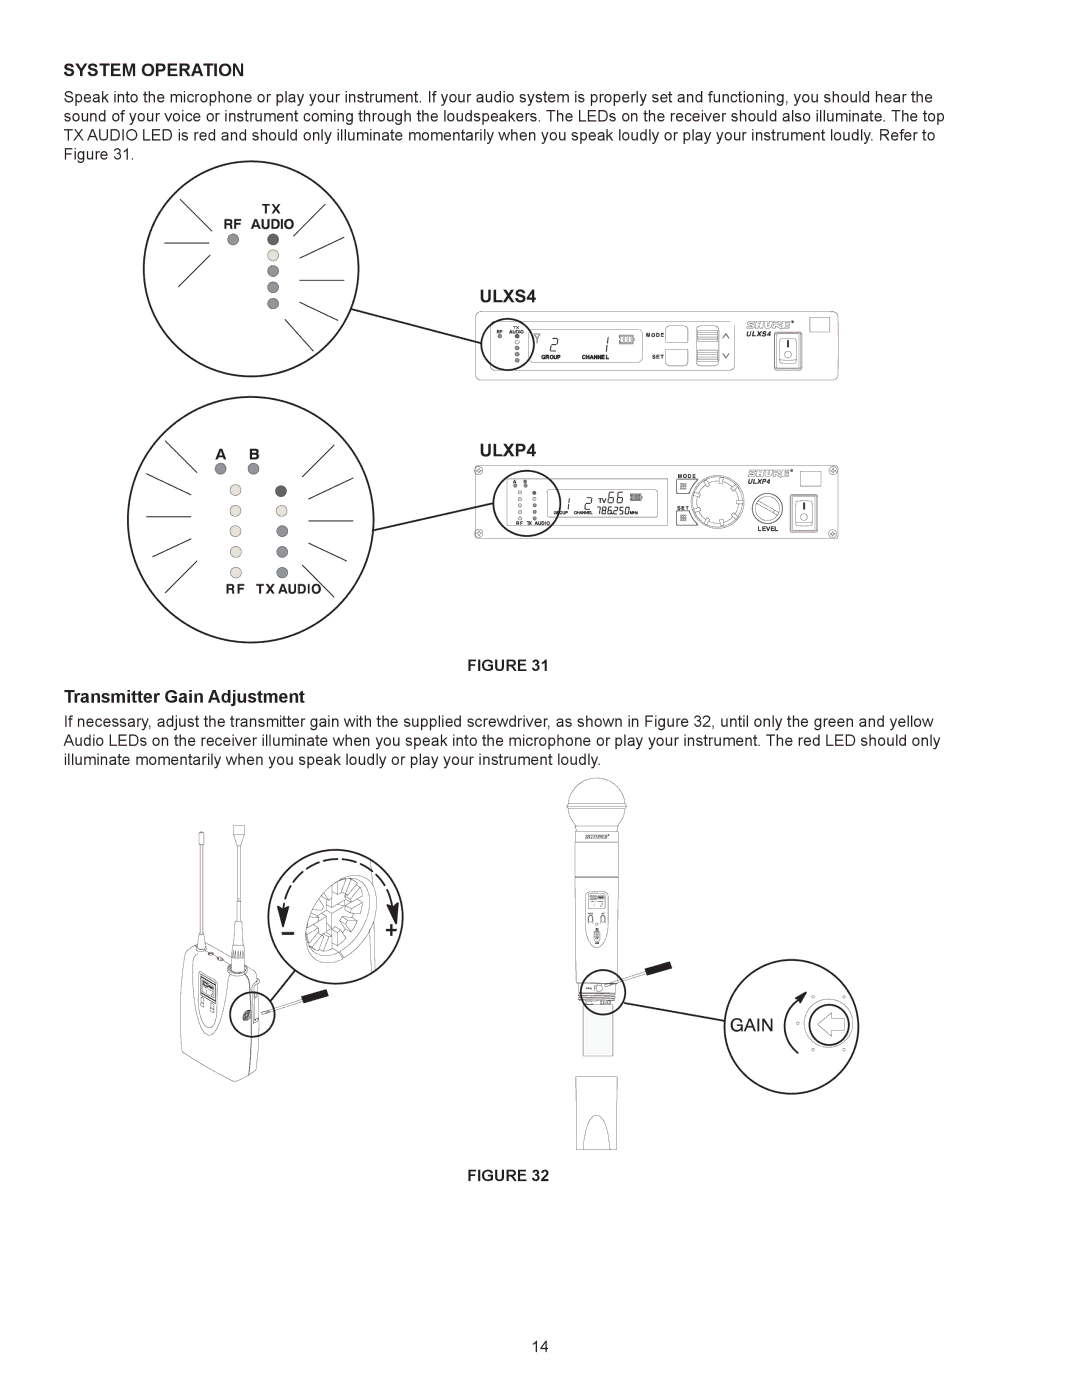 Shure manual System Operation, ULXS4 ULXP4, Transmitter Gain Adjustment 